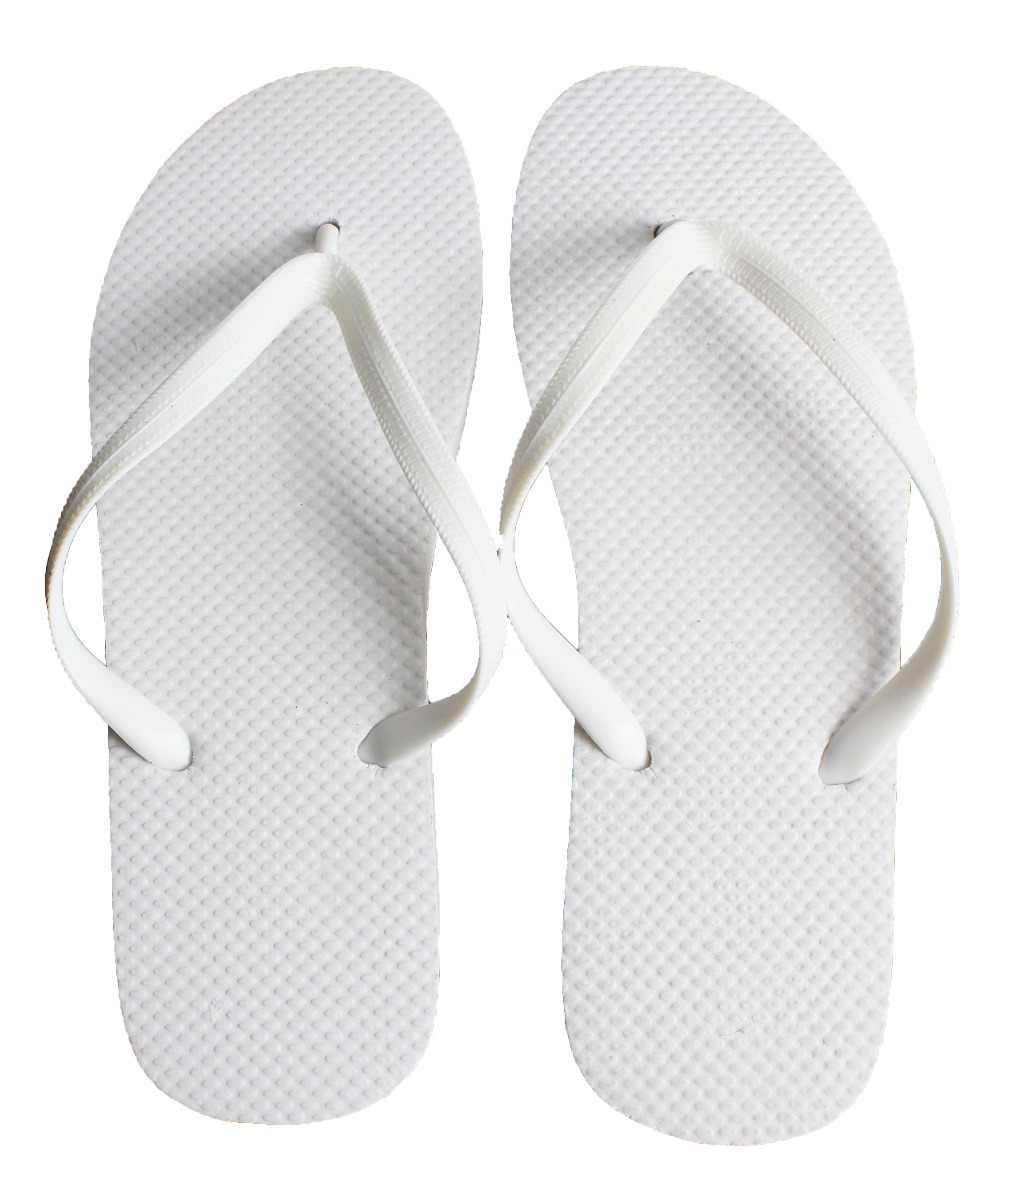 Wholesale Flip Flops & Sandals in Bulk | Eros Wholesale | eroswholesale.com